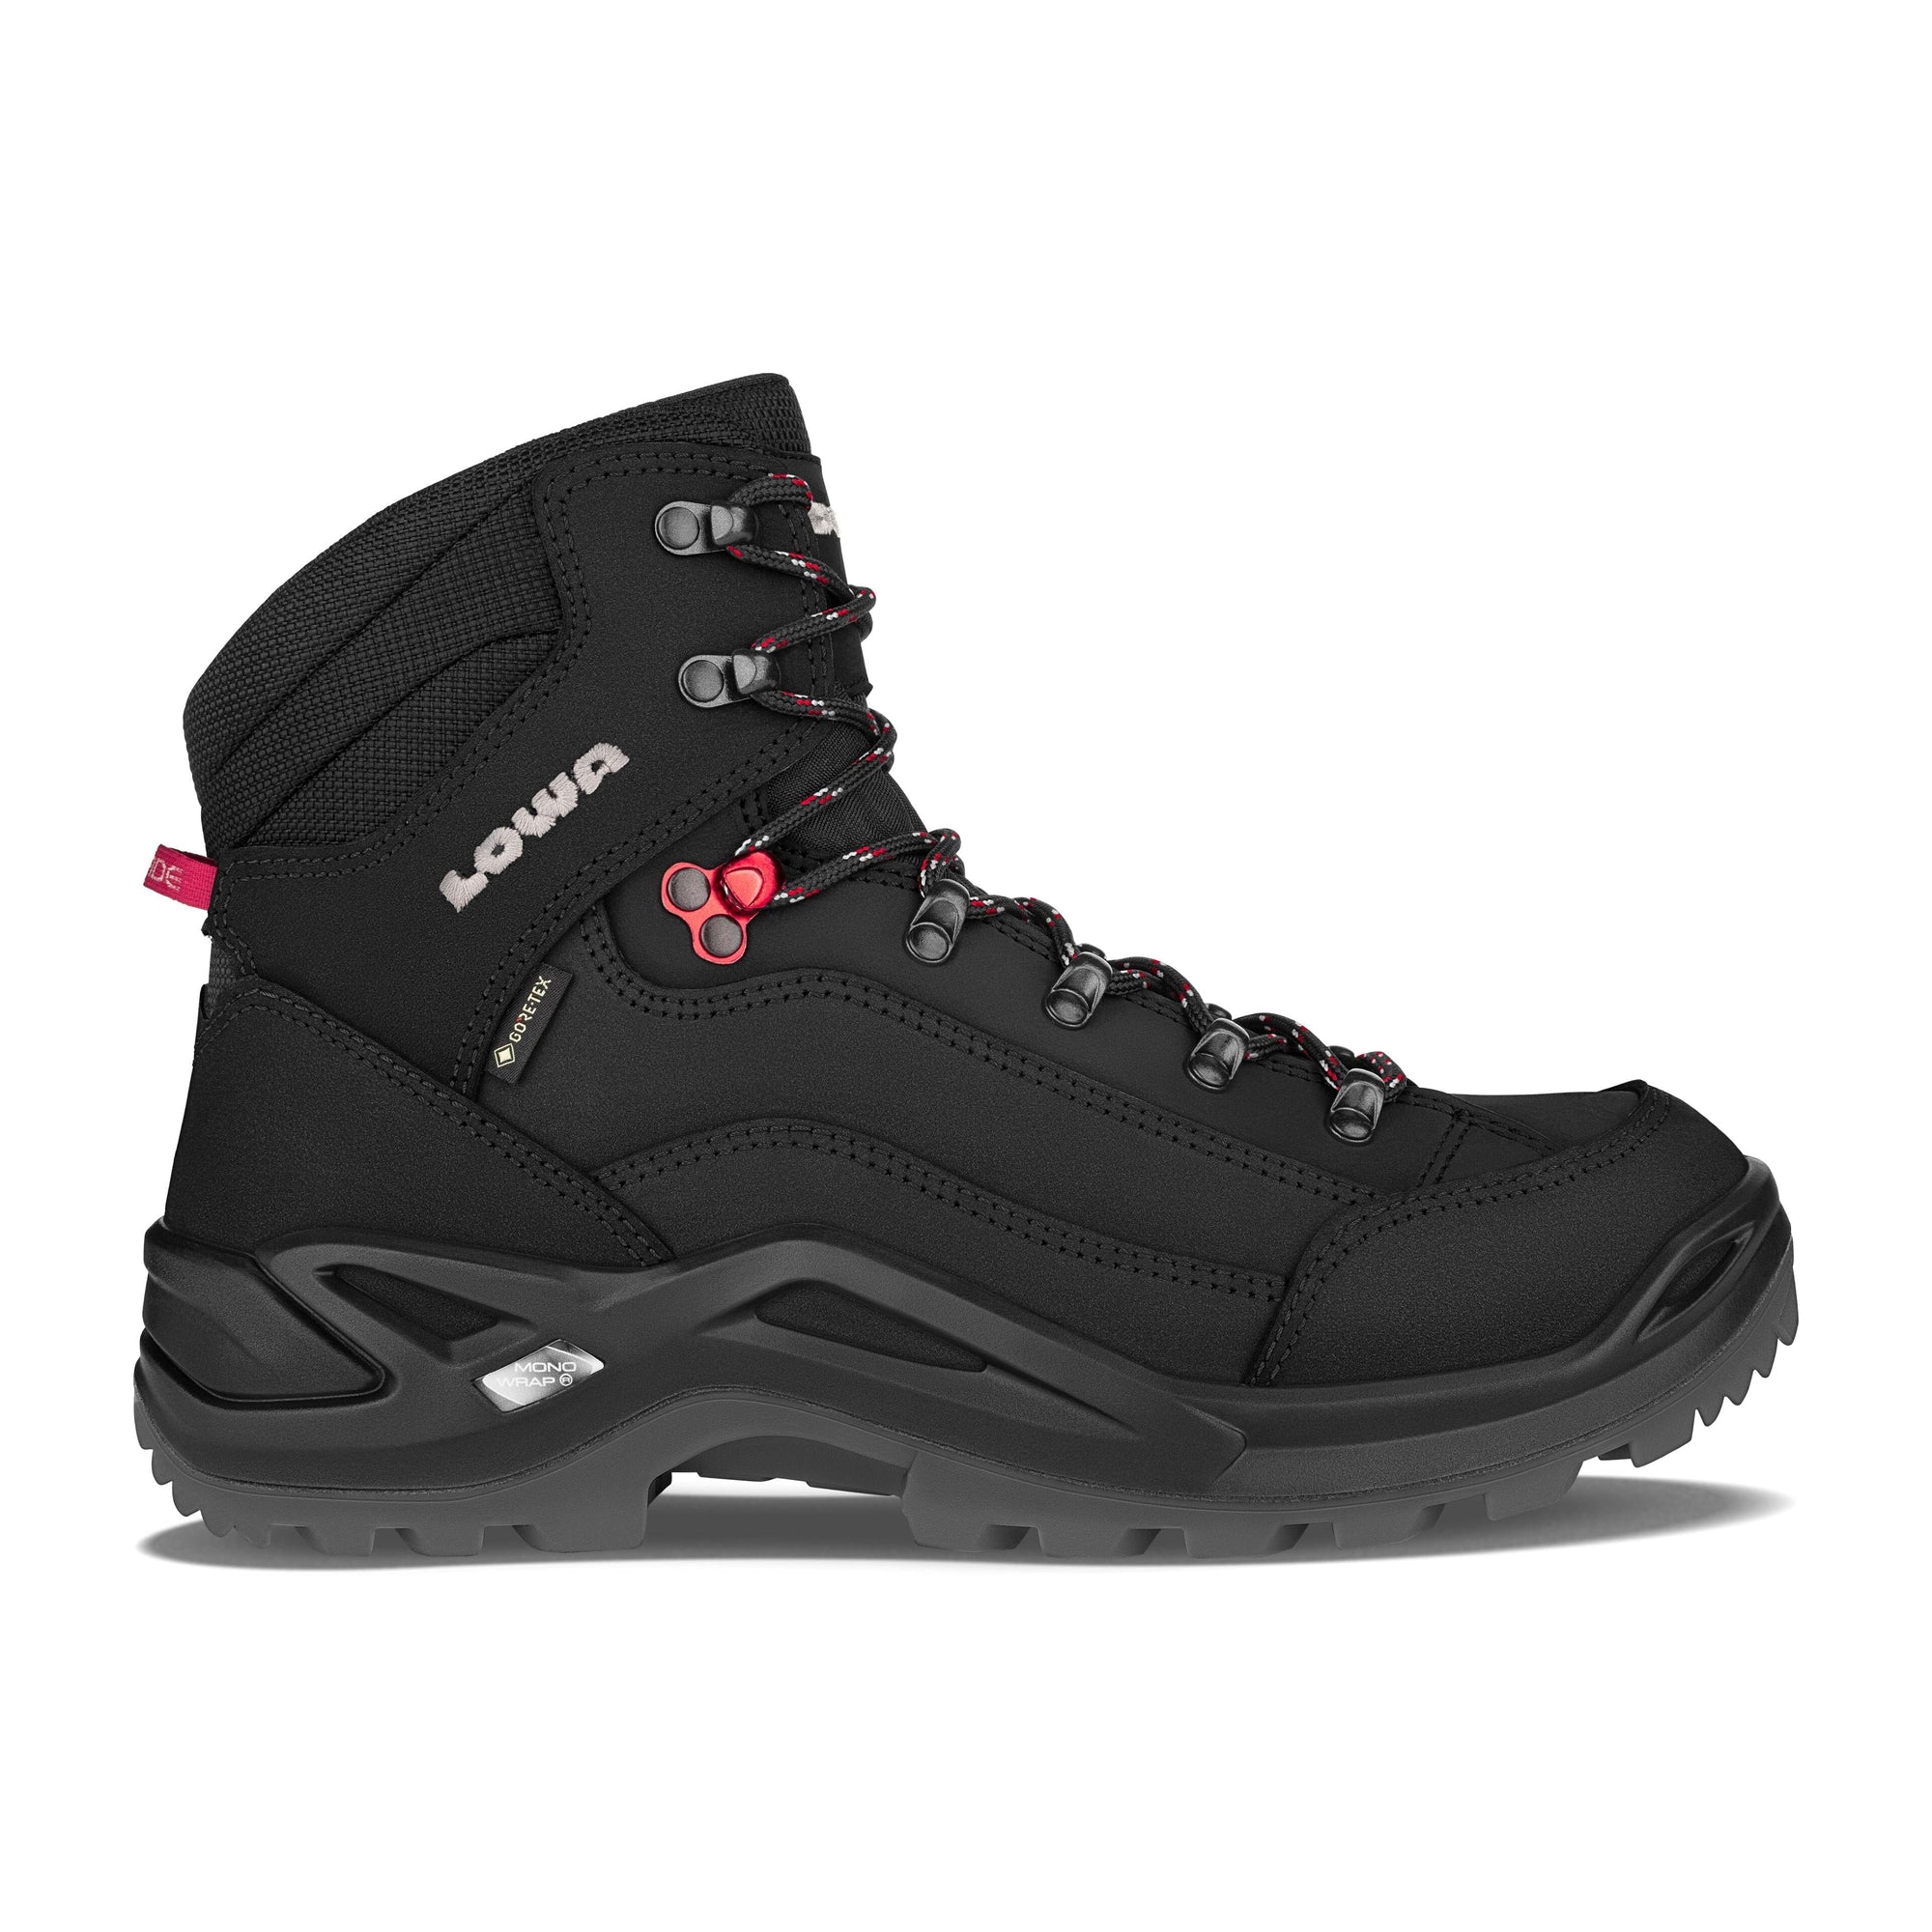 Lowa Men's Renegade GTX Mid Hiking Shoes Black/Ruby Red UK 9.5 